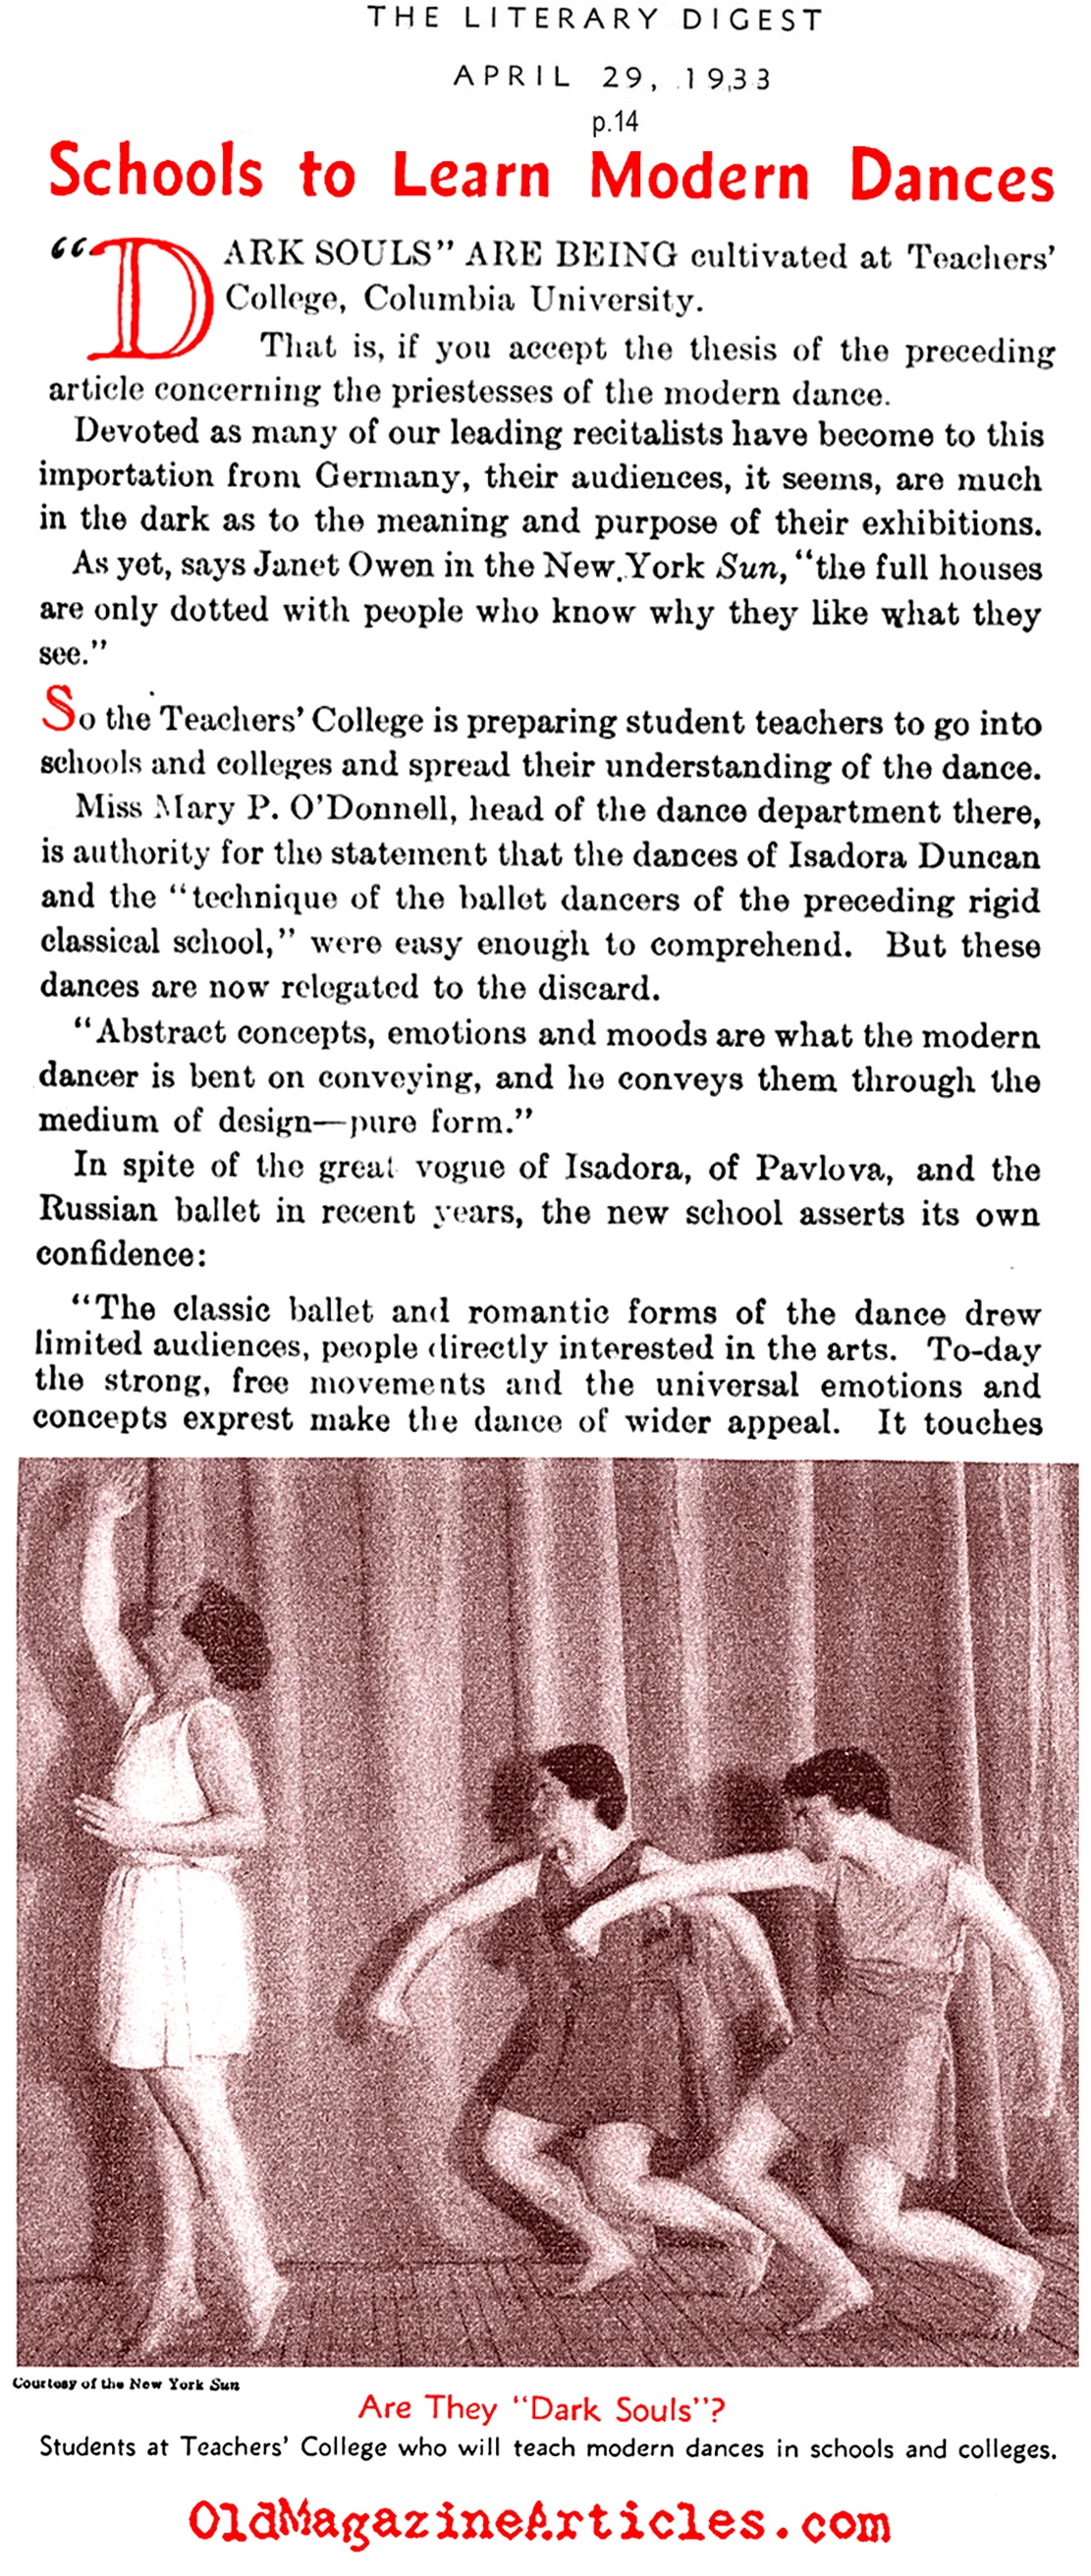 Modern Dance: Spreading the News (Literary Digest, 1933)